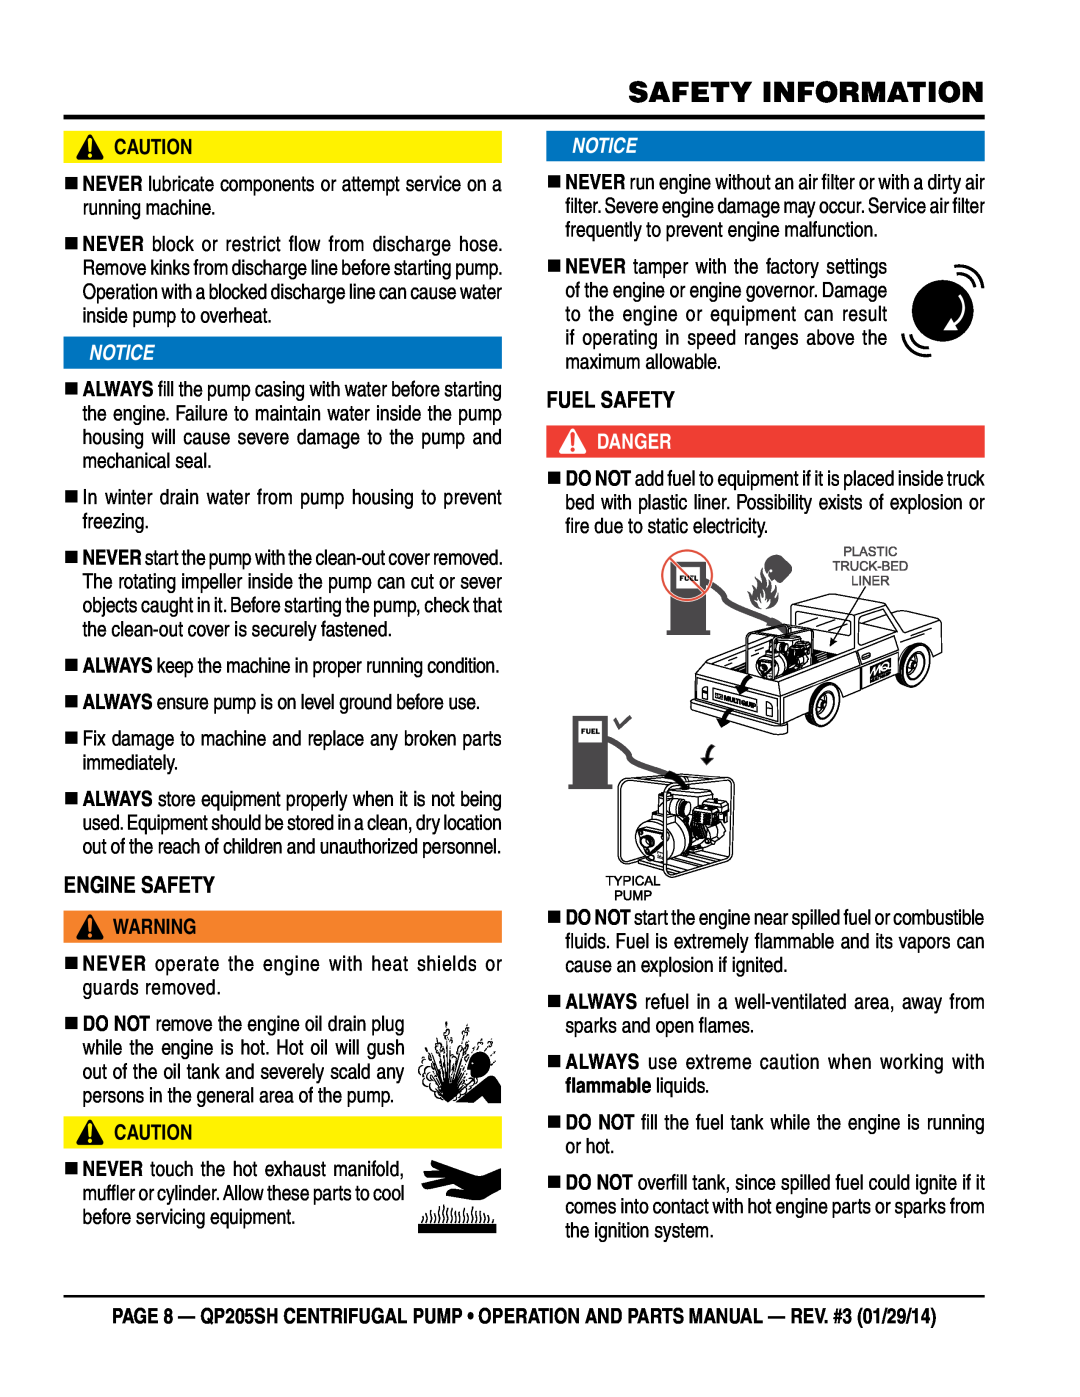 Honda Power Equipment QP205SH manual Engine Safety, Fuel Safety, Safety Information, Danger 